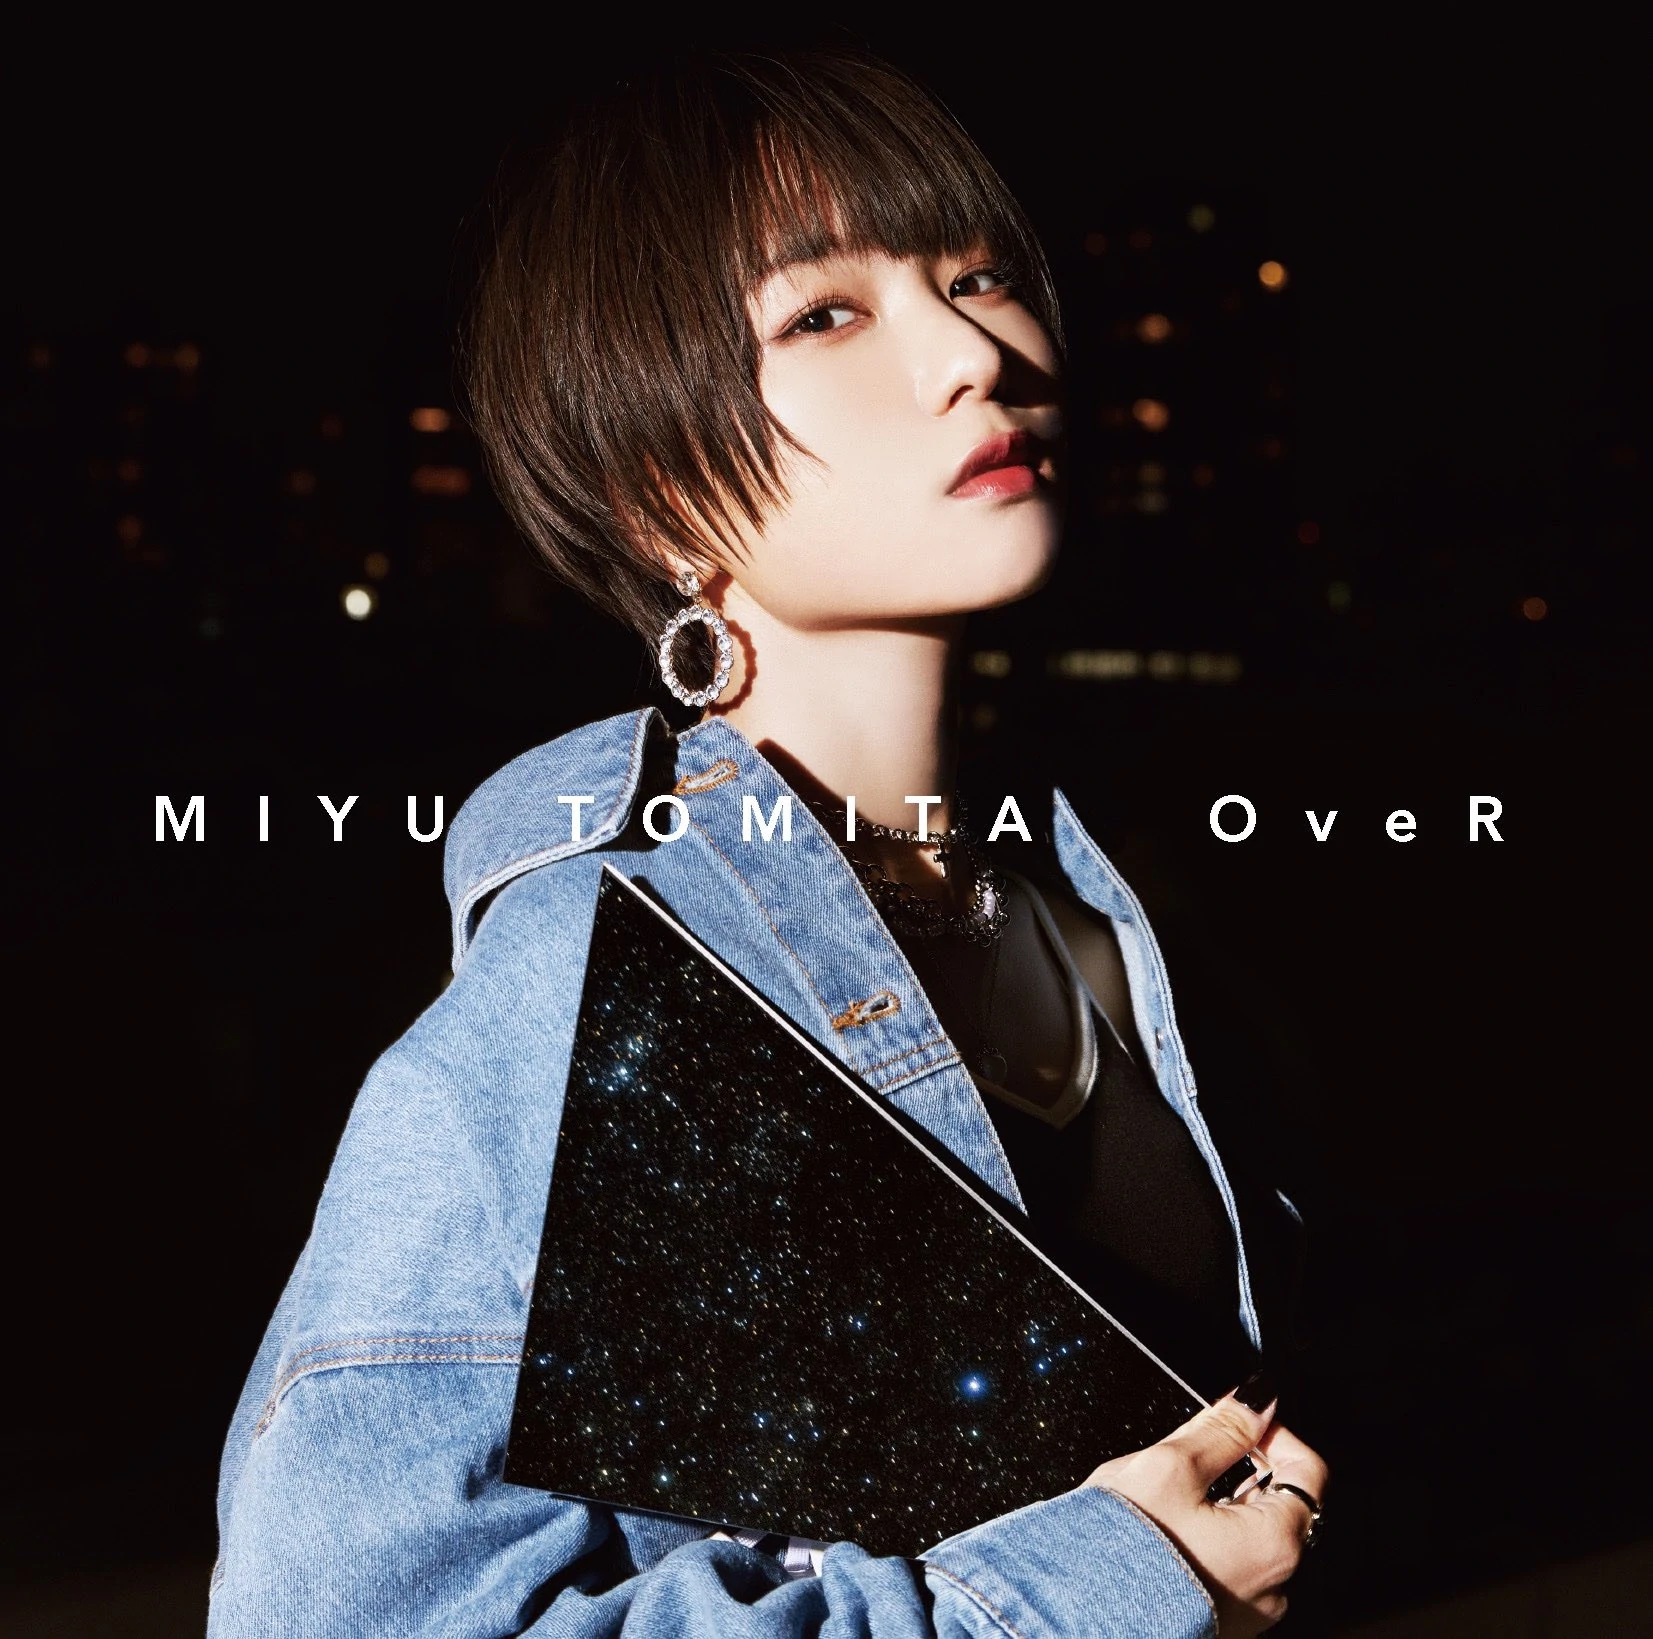 Date a Live Season 4 Opening Full : OveR - Miyu Tomita Lyrics [CC